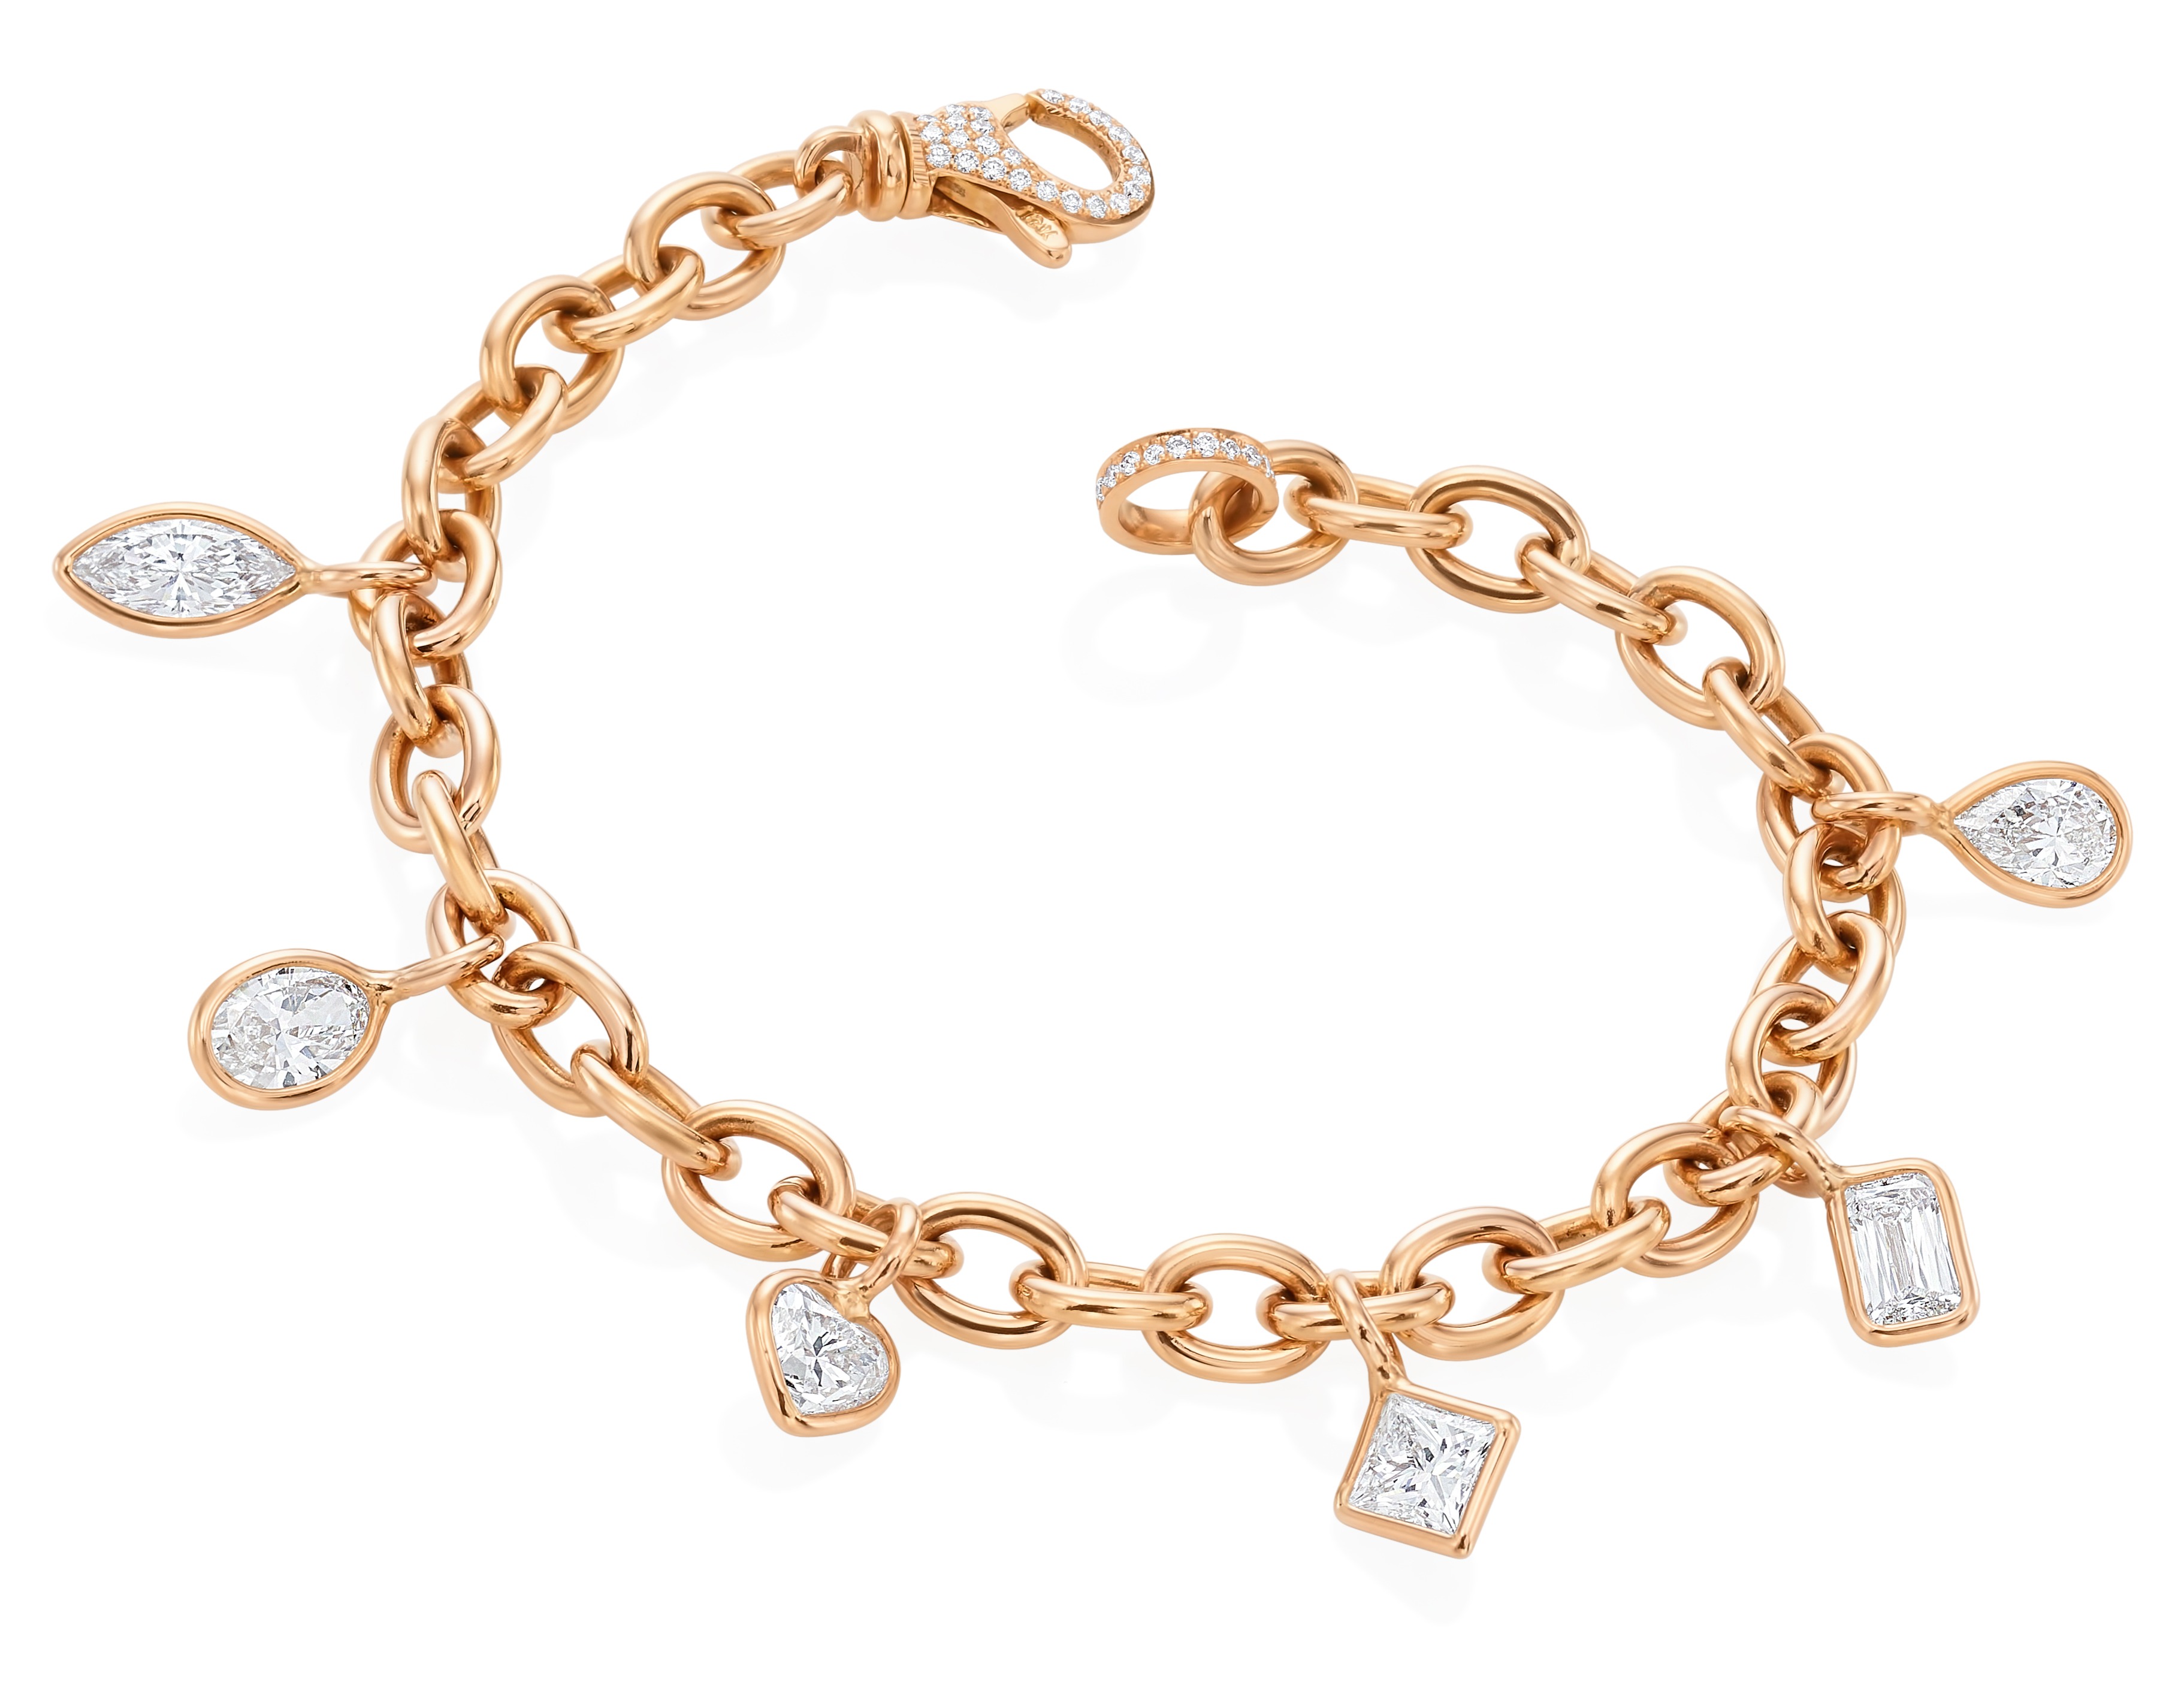 Buy quality The rose gold bracelet in 18kt in Pune